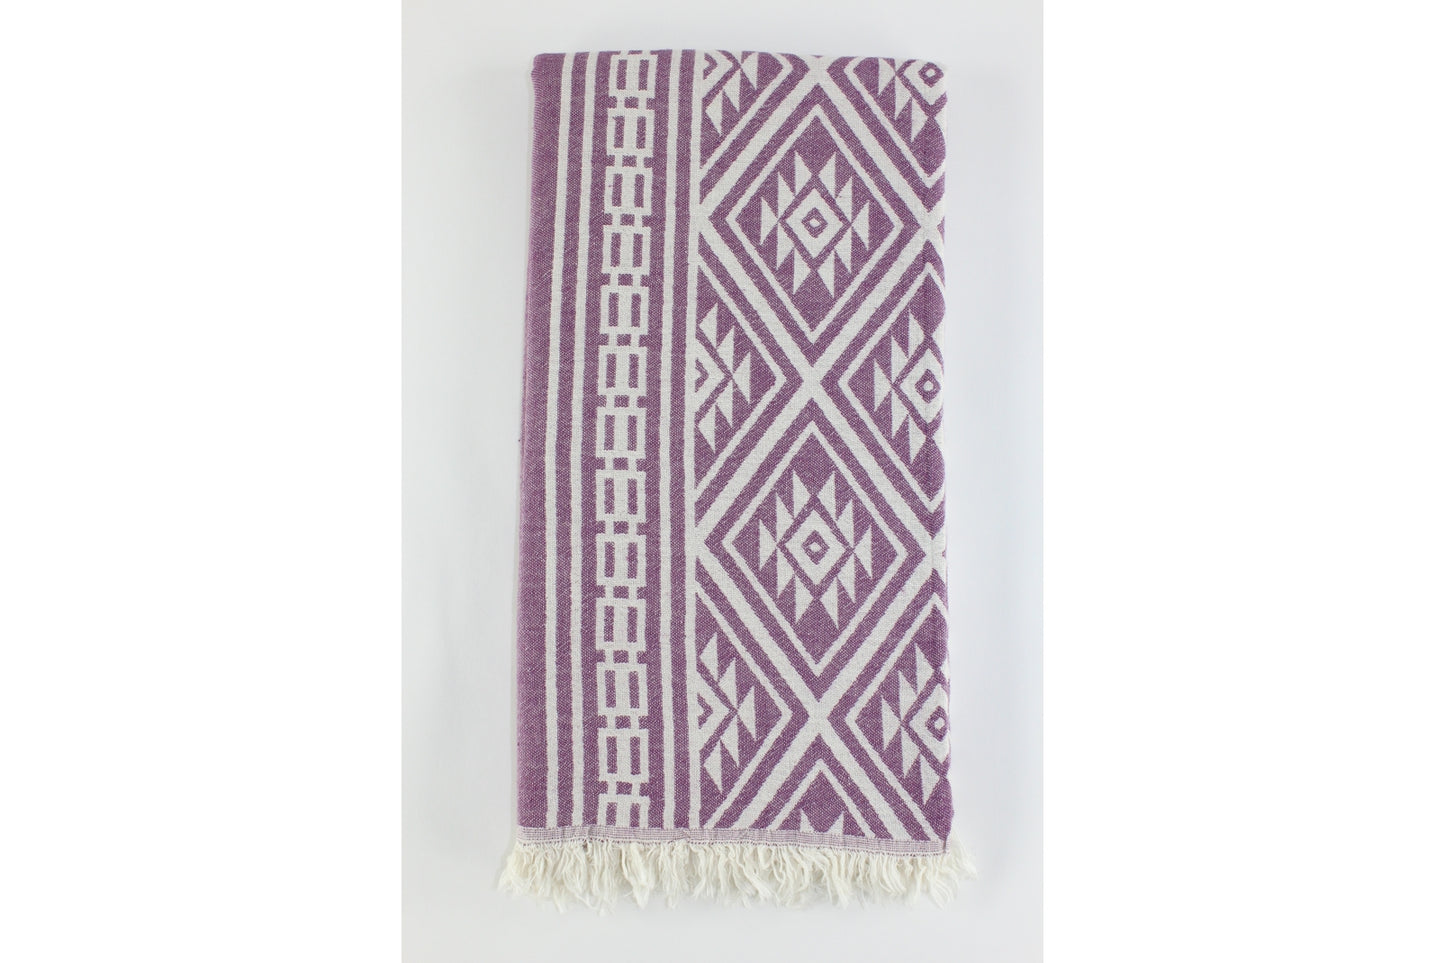 Premium Turkish Double Layer Kilim Towel Peshtemal Fouta (Purple)